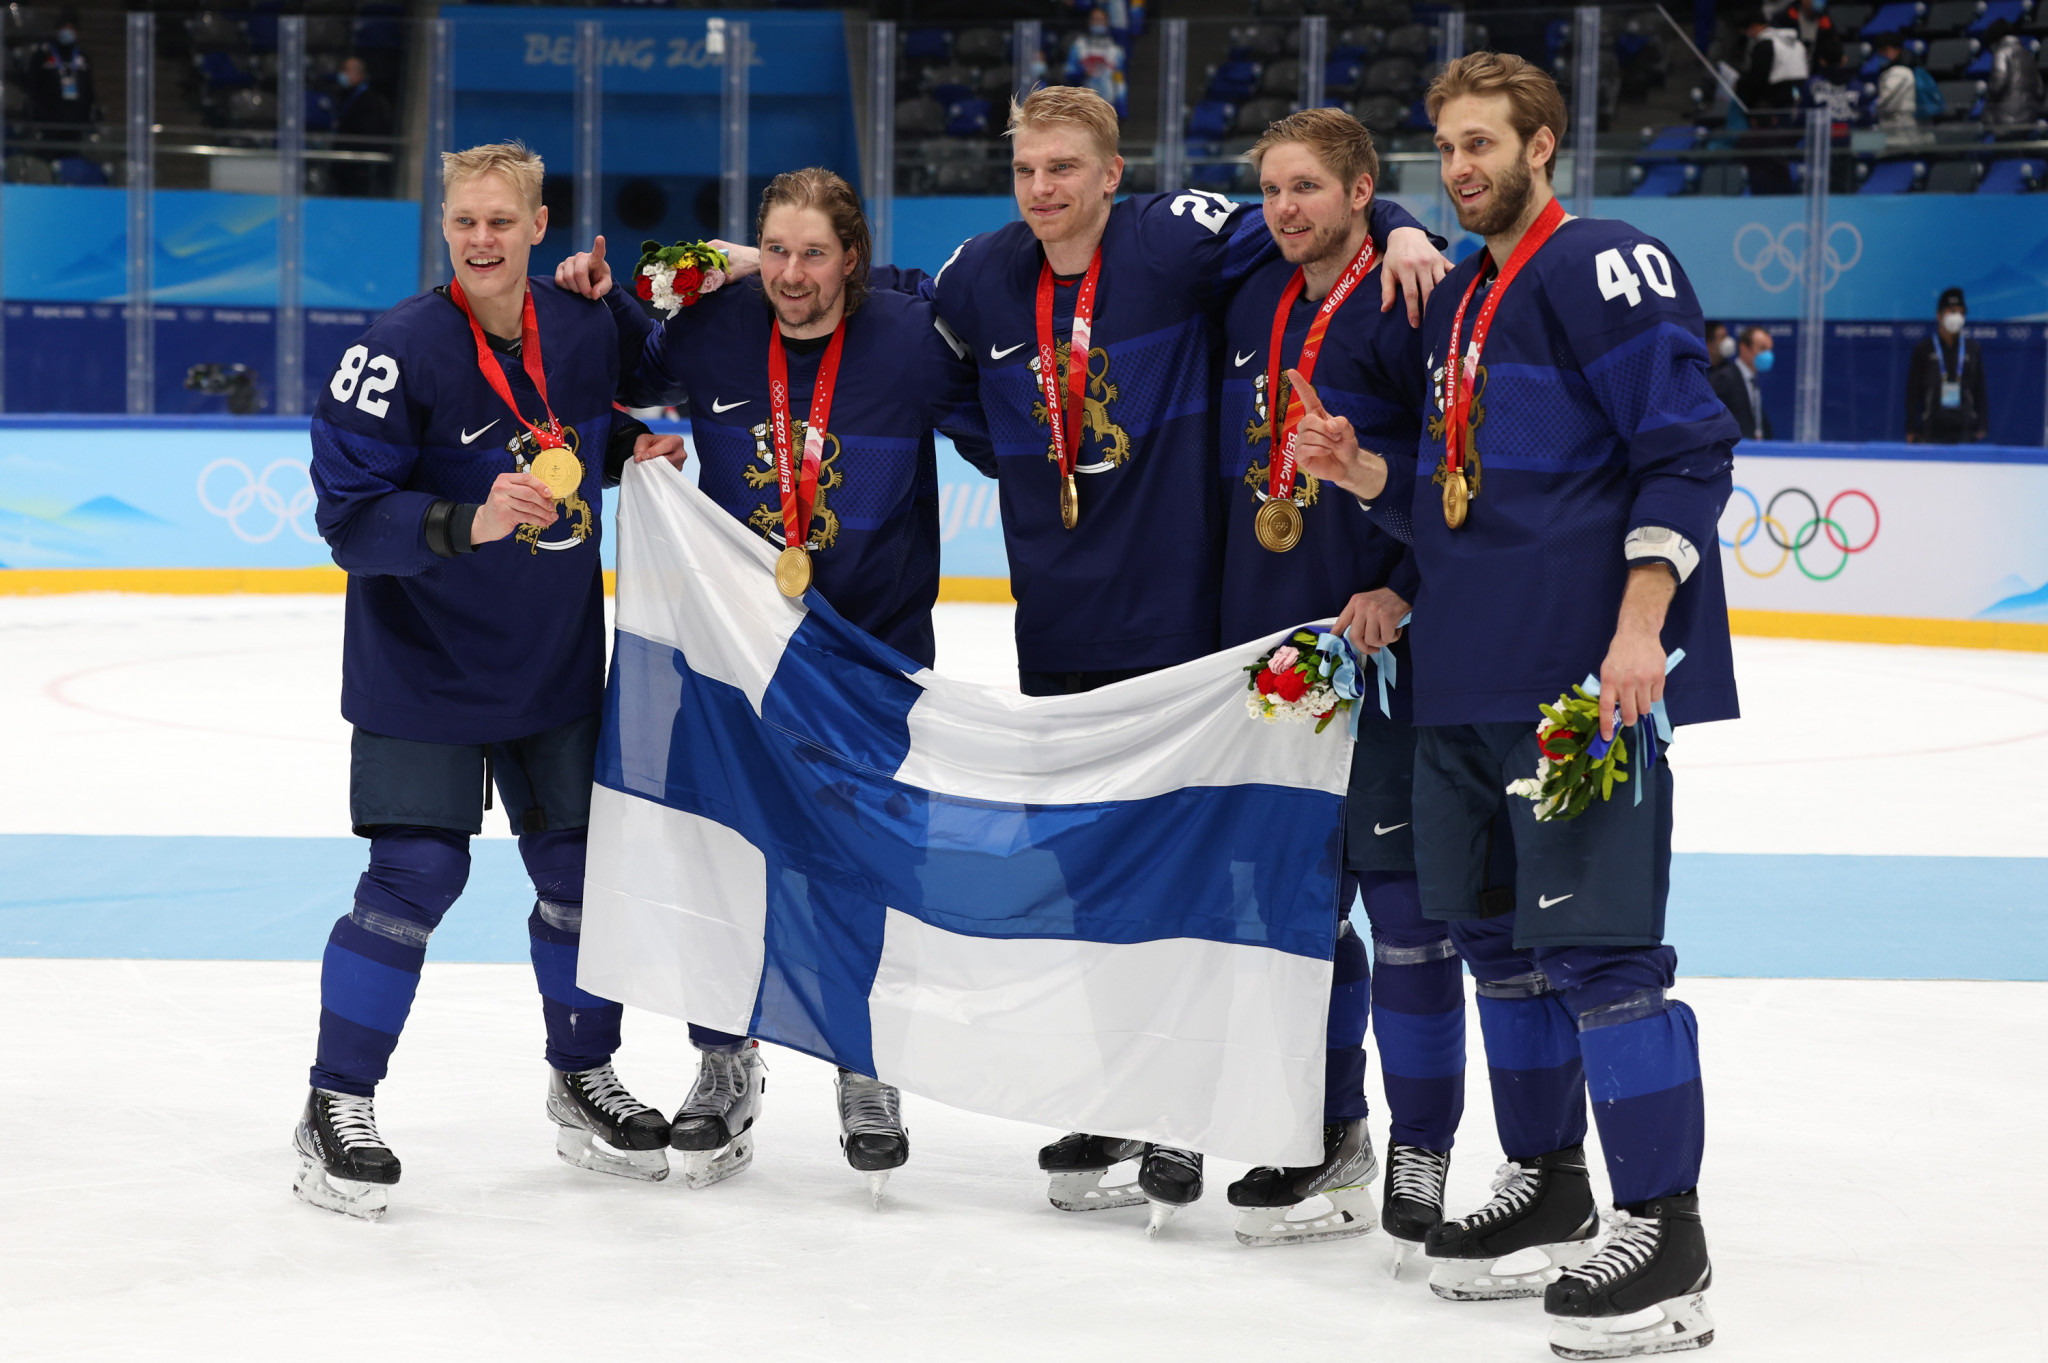 Olympic ice hockey champions move to top of IIHF world rankings